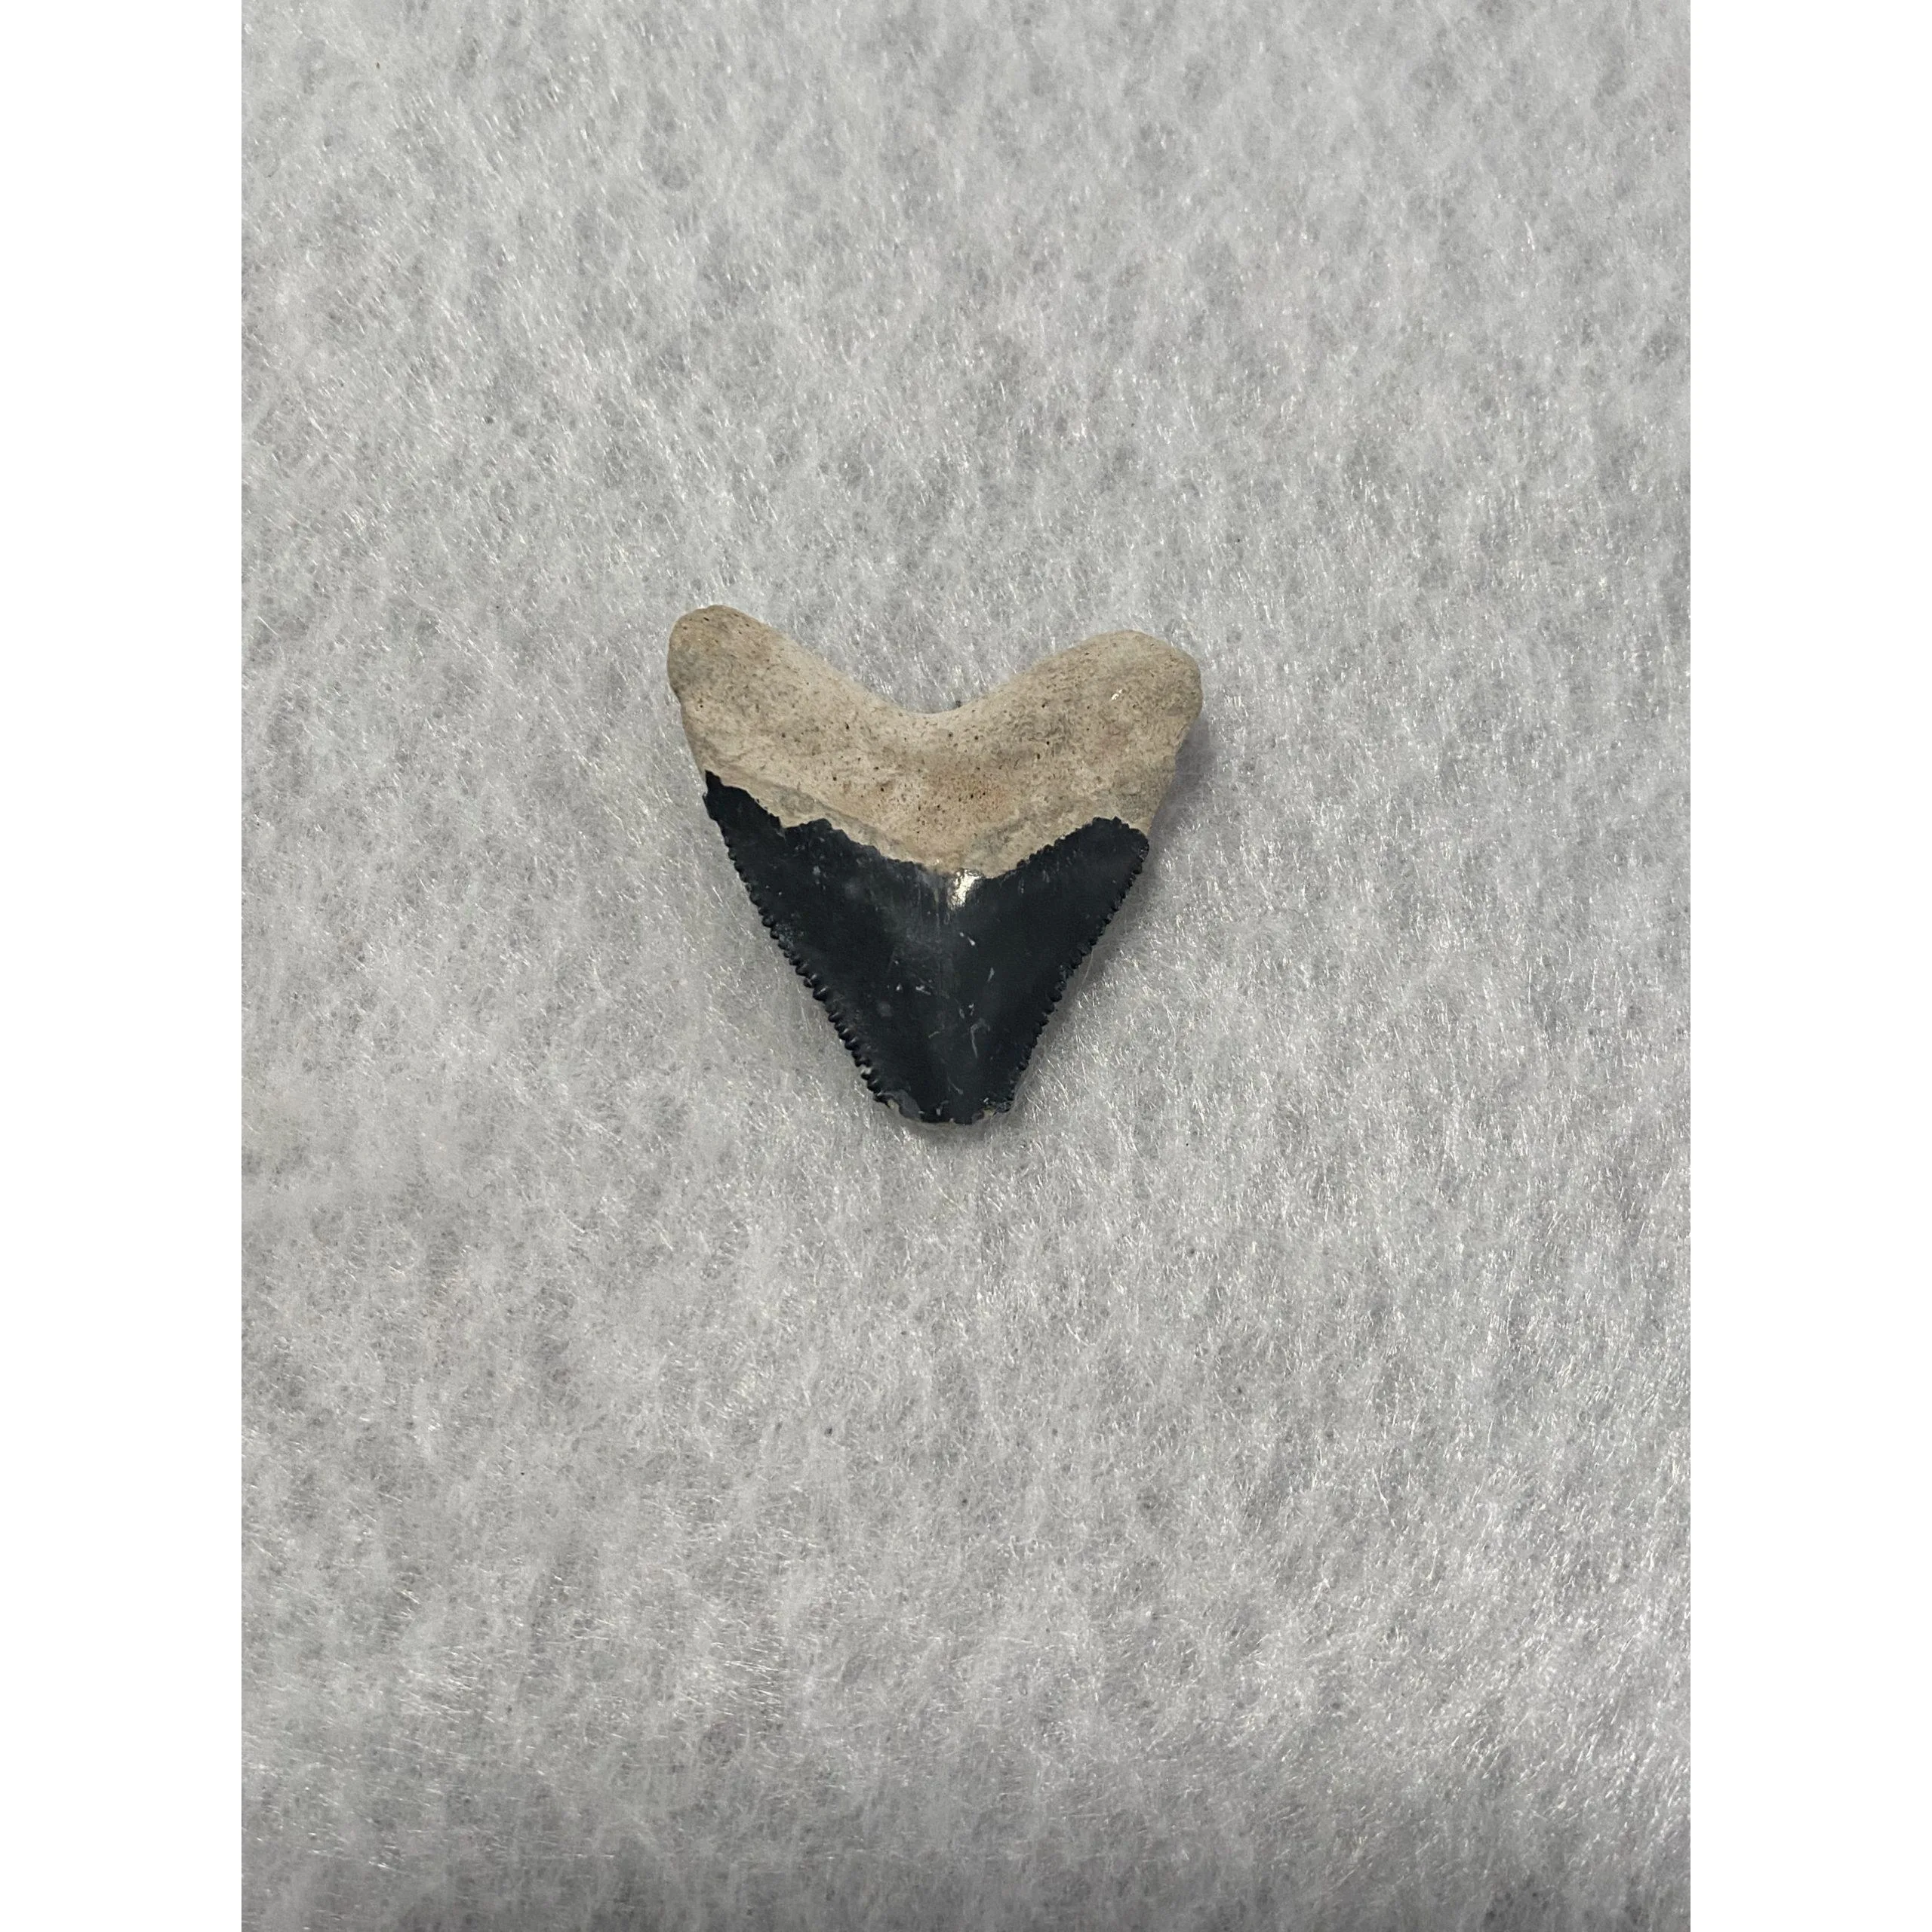 Megalodon Tooth, Bone Valley, Florida,1.36 inch Prehistoric Online